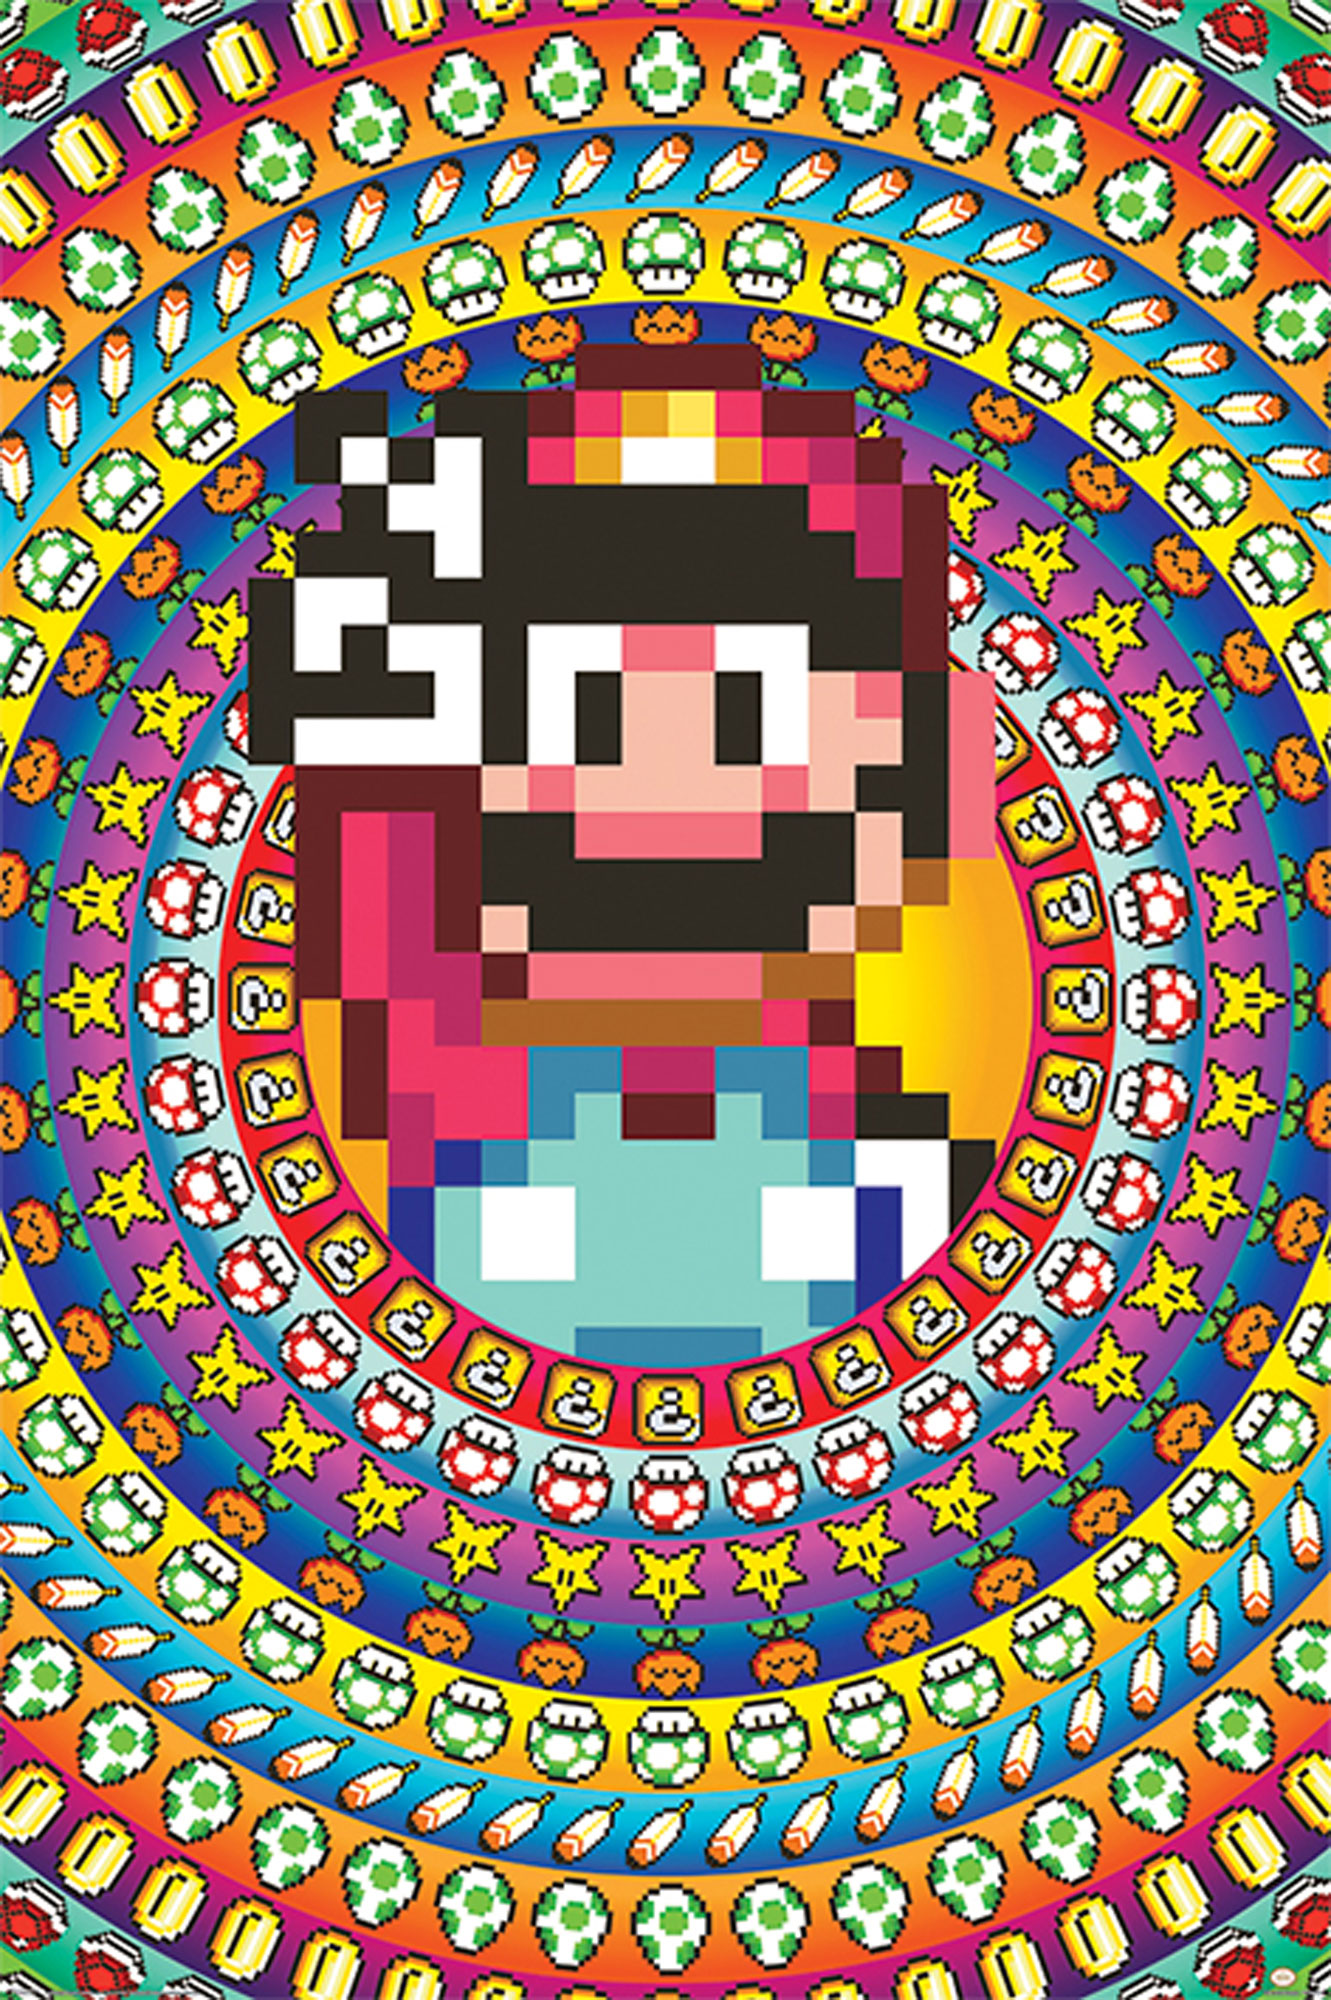 Ups Power - Nintendo - Super Mario